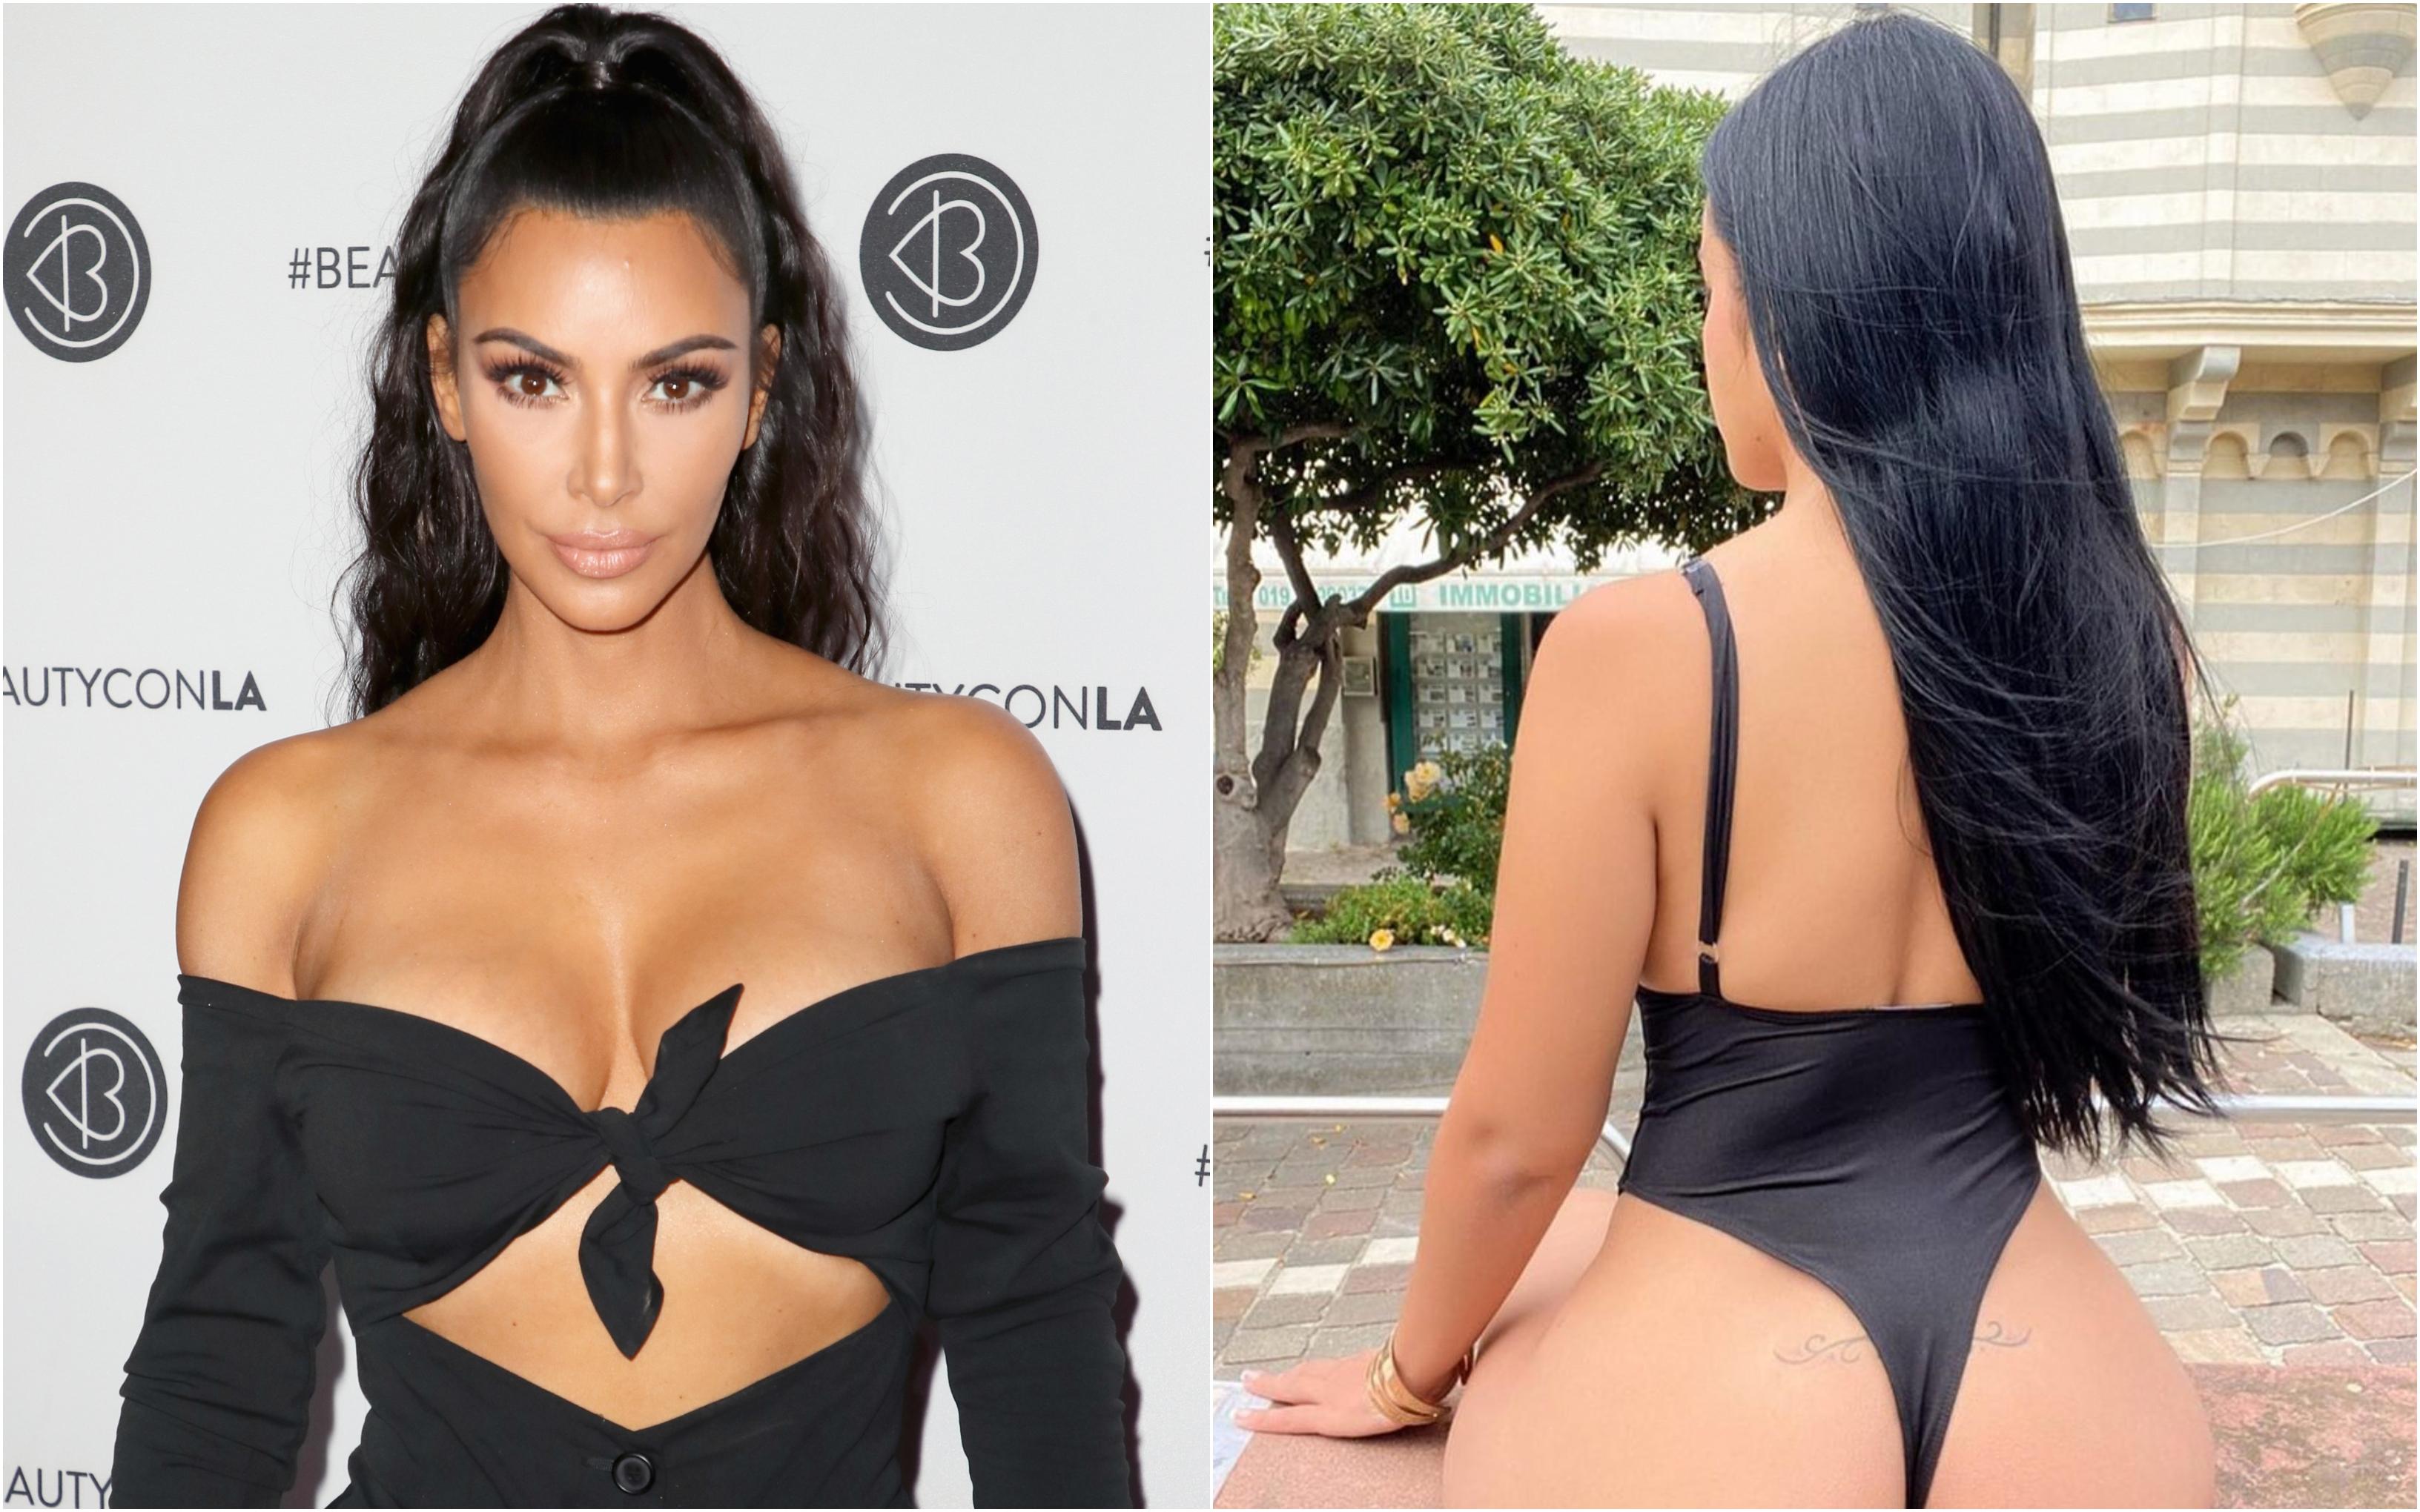 Colaj Kim Kardashian si Mariana Cristina Fragozo Herazo, imbracate in negru